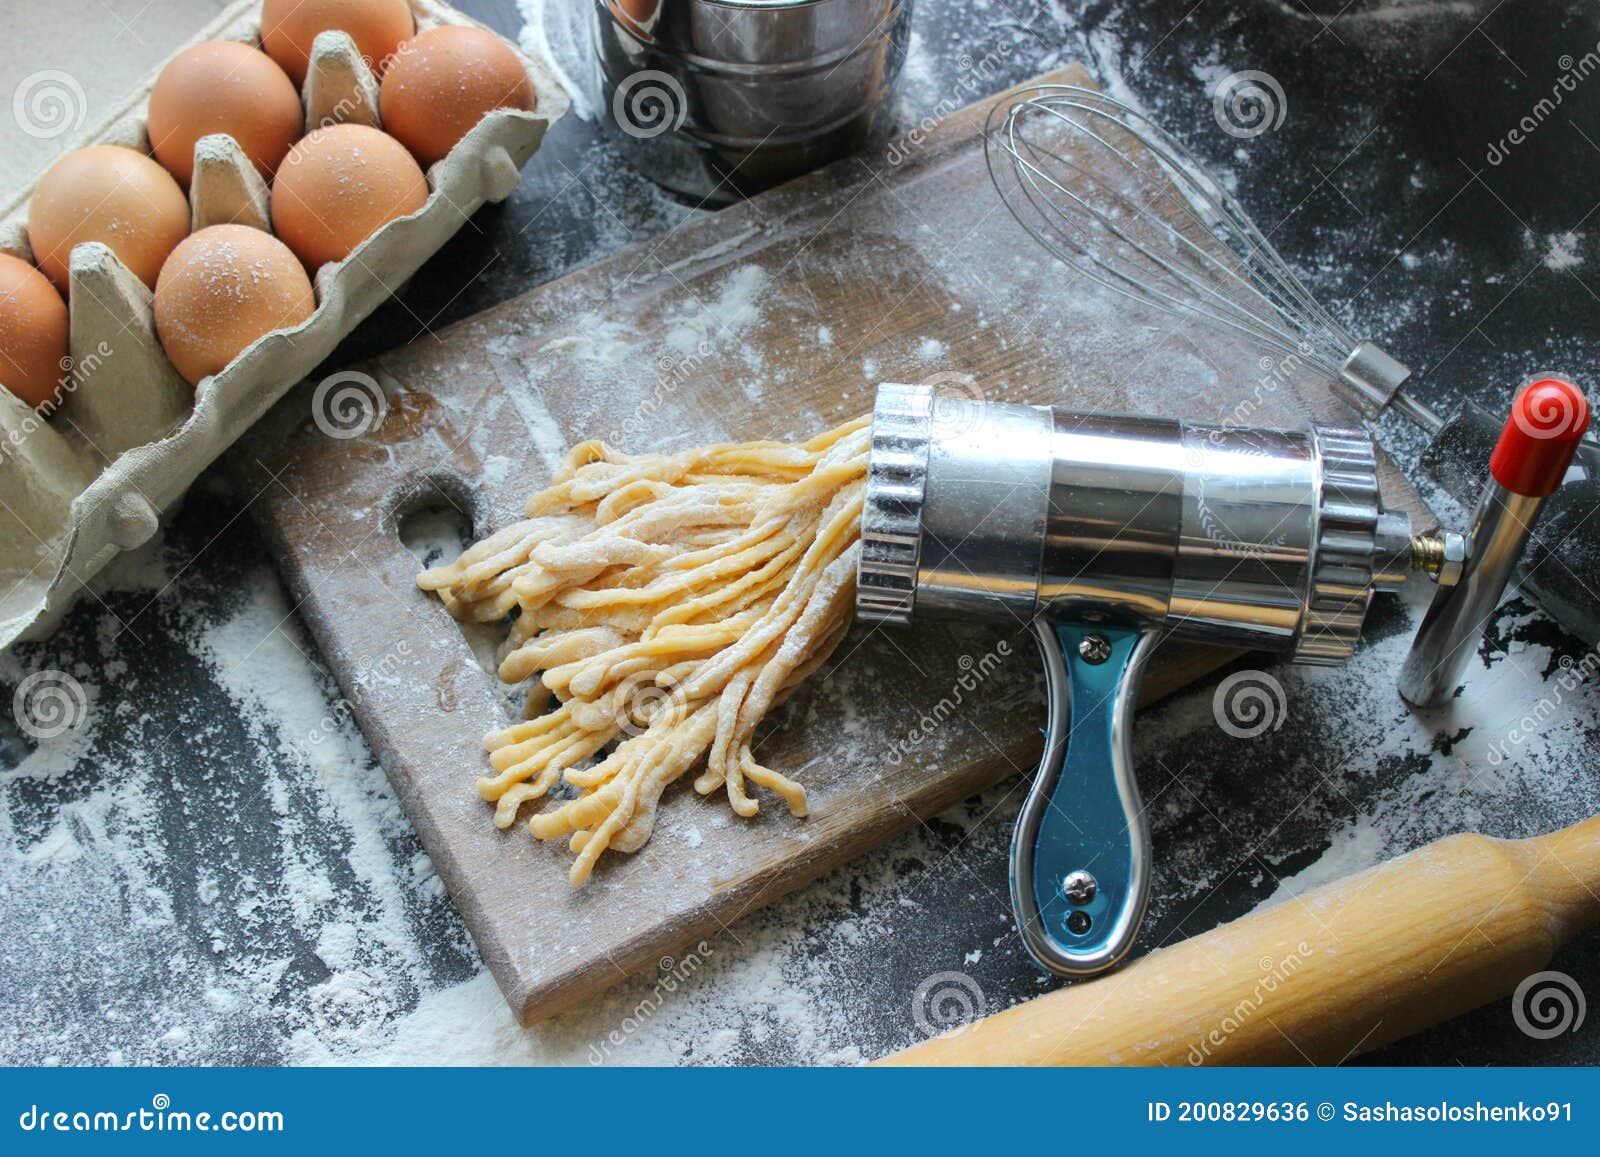 https://thumbs.dreamstime.com/z/machine-cooking-pasta-dough-pasta-metal-machine-production-pasta-ingredients-pasta-machine-cooking-200829636.jpg